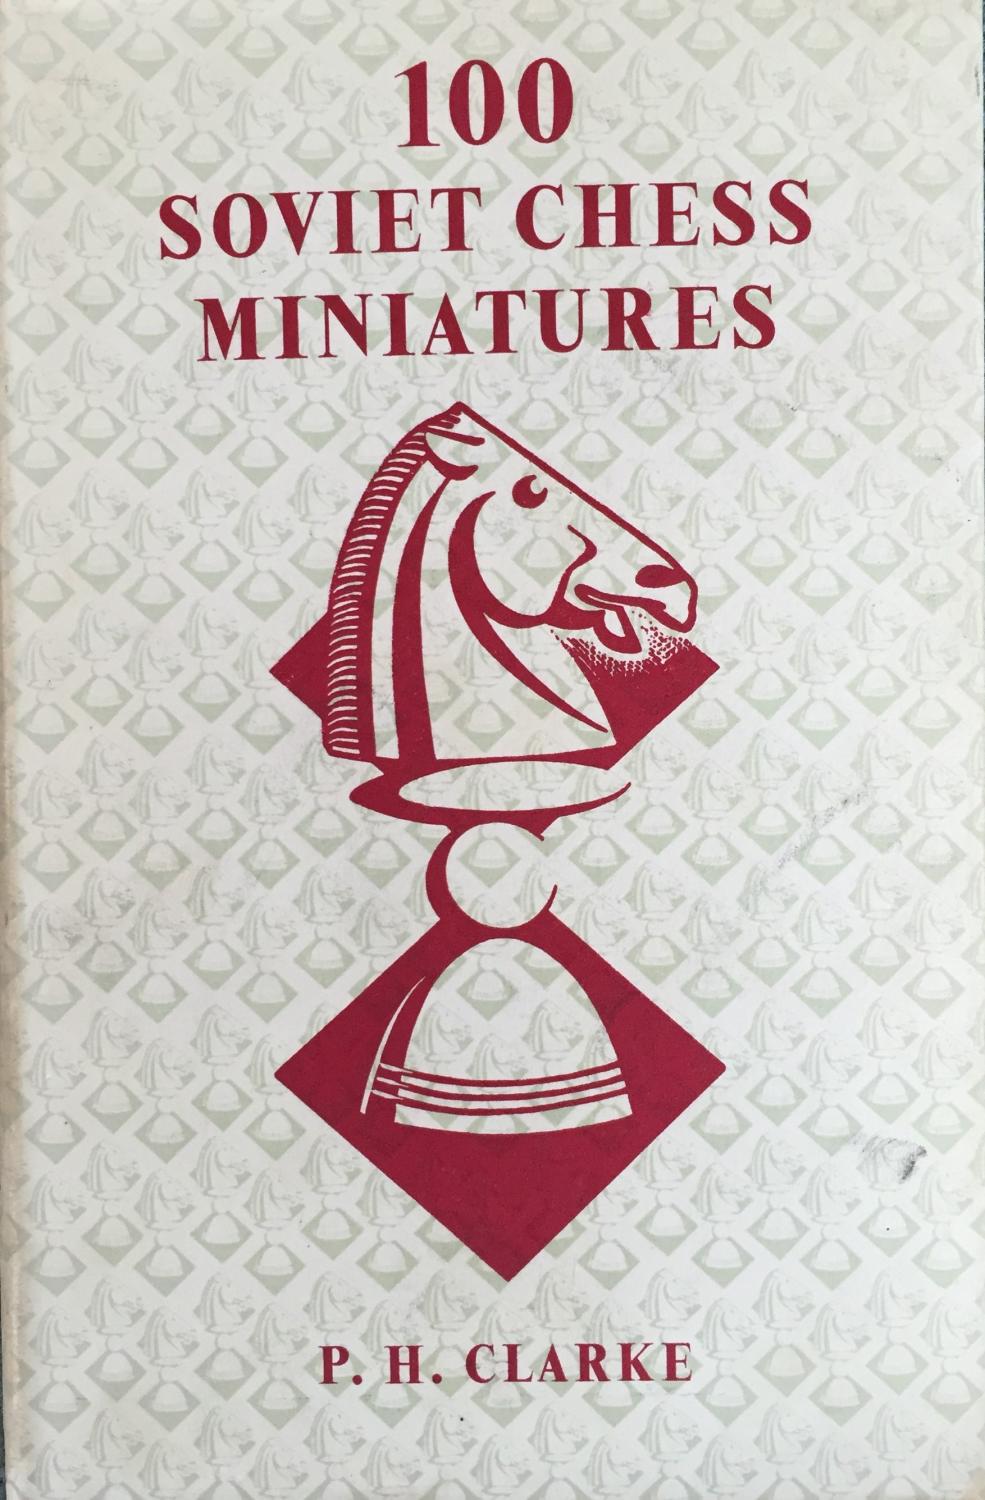 100 Soviet Chess Miniatures - P. H. Clarke